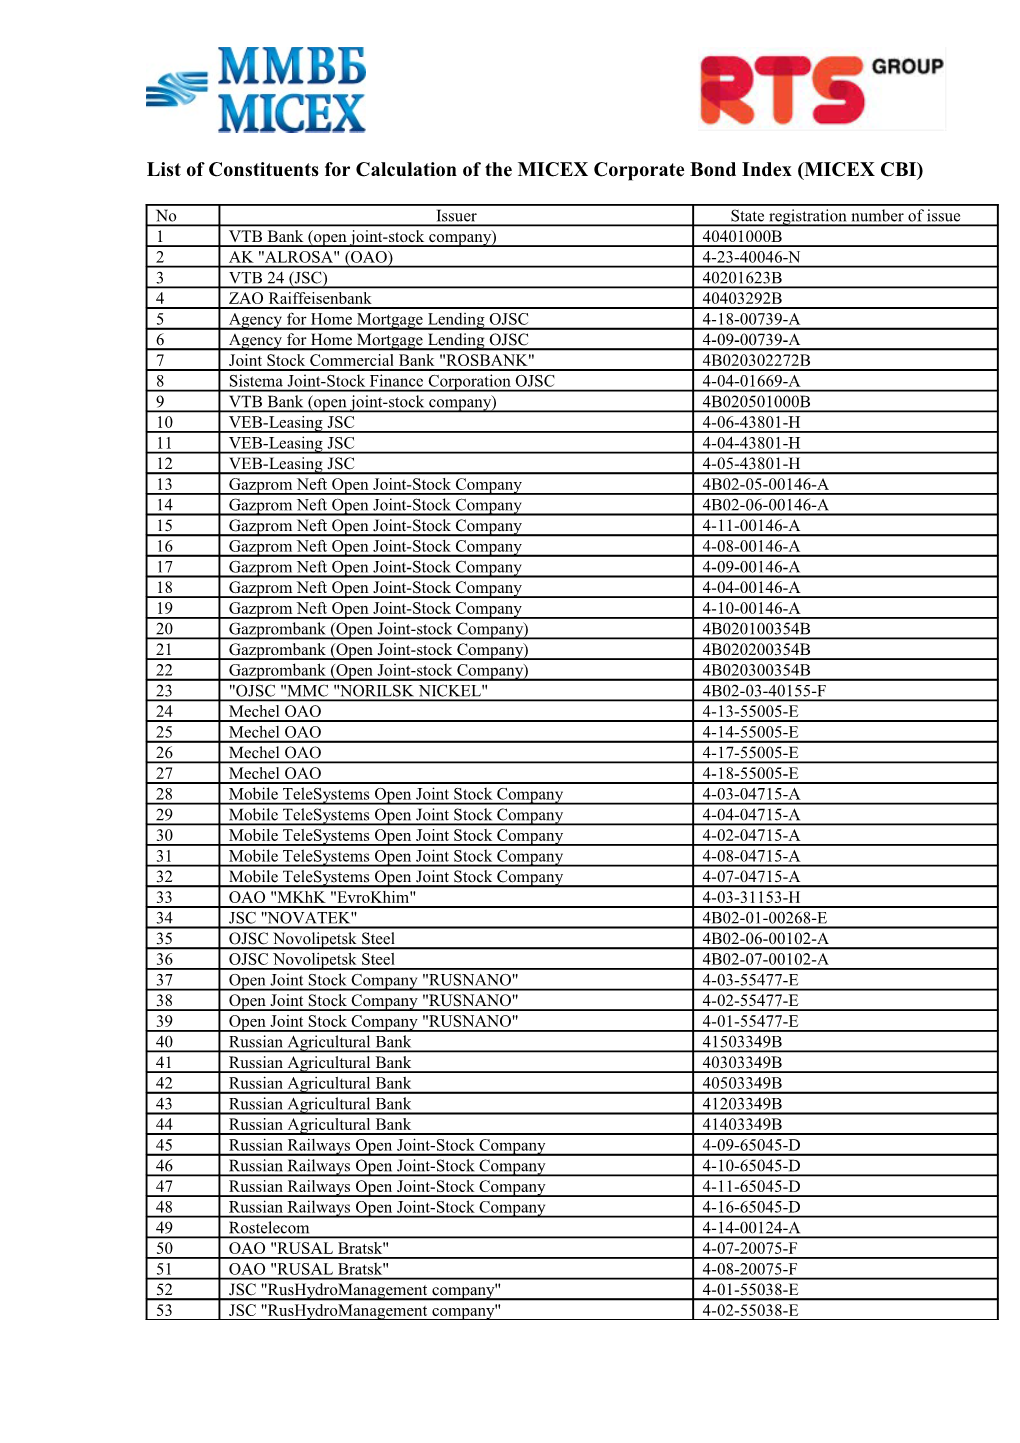 List of Constituentsfor Calculation of the MICEX Corporate Bond Index (MICEX CBI)